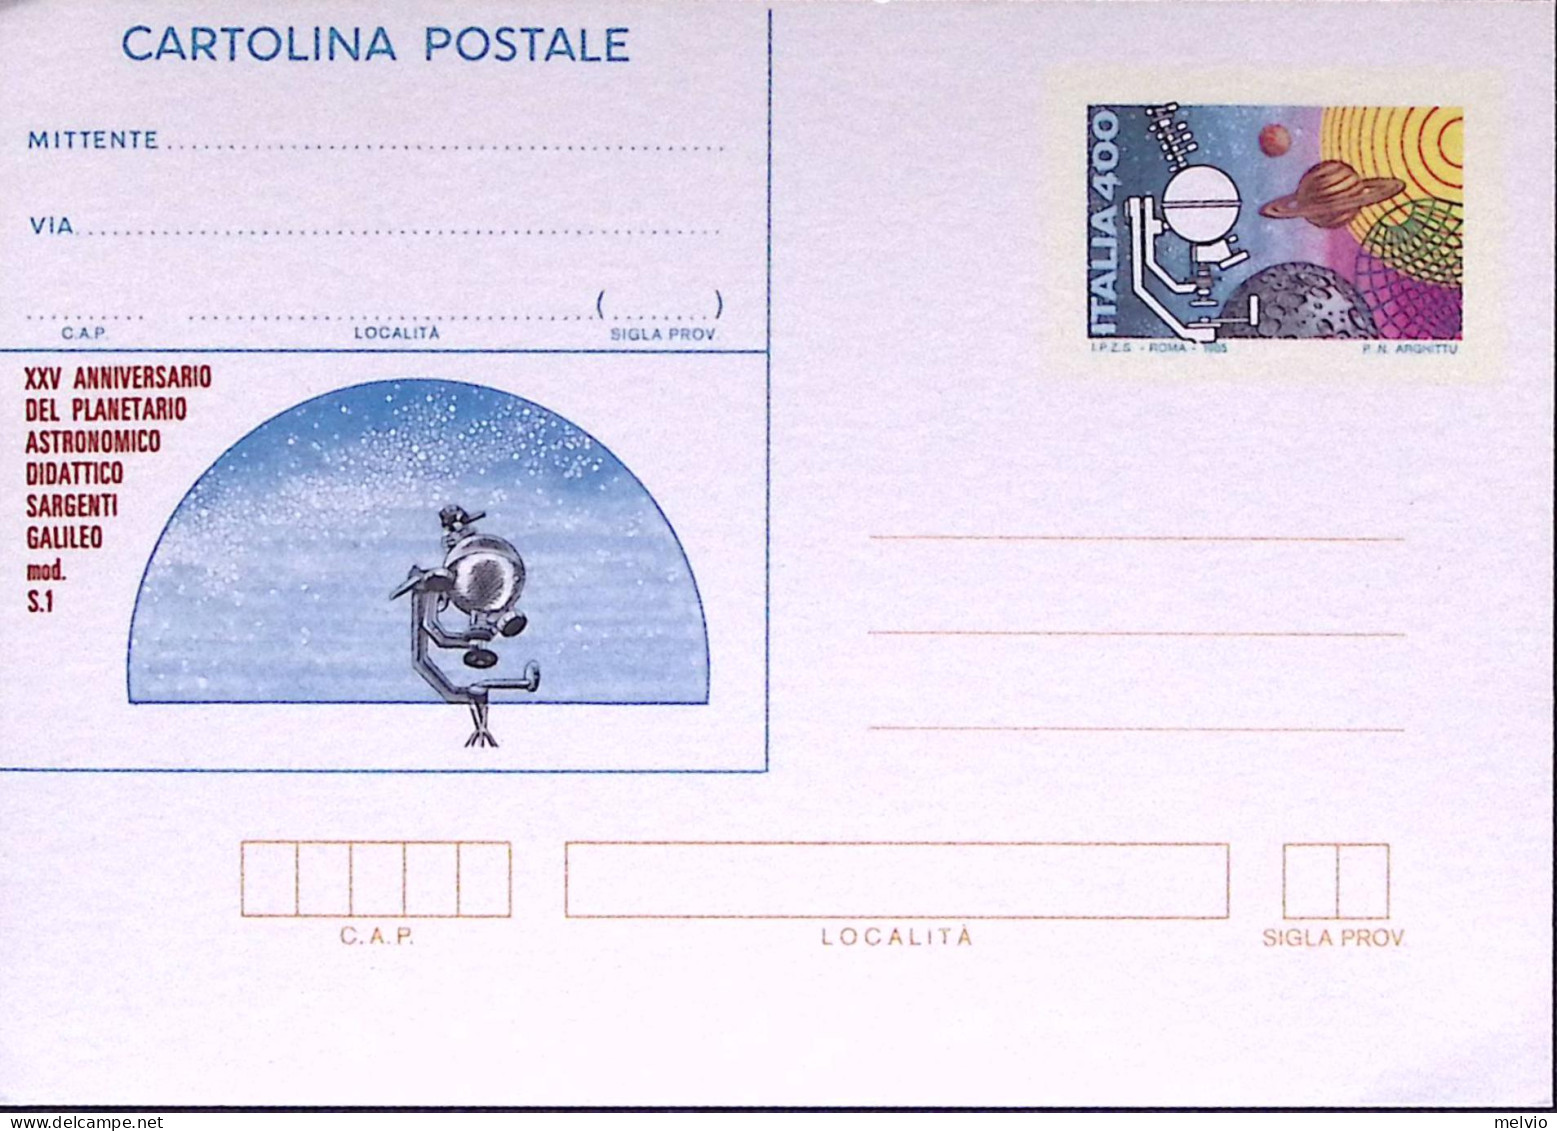 1985-Cartolina Postale Lire 400 Umbriaphil Nuova - Postwaardestukken